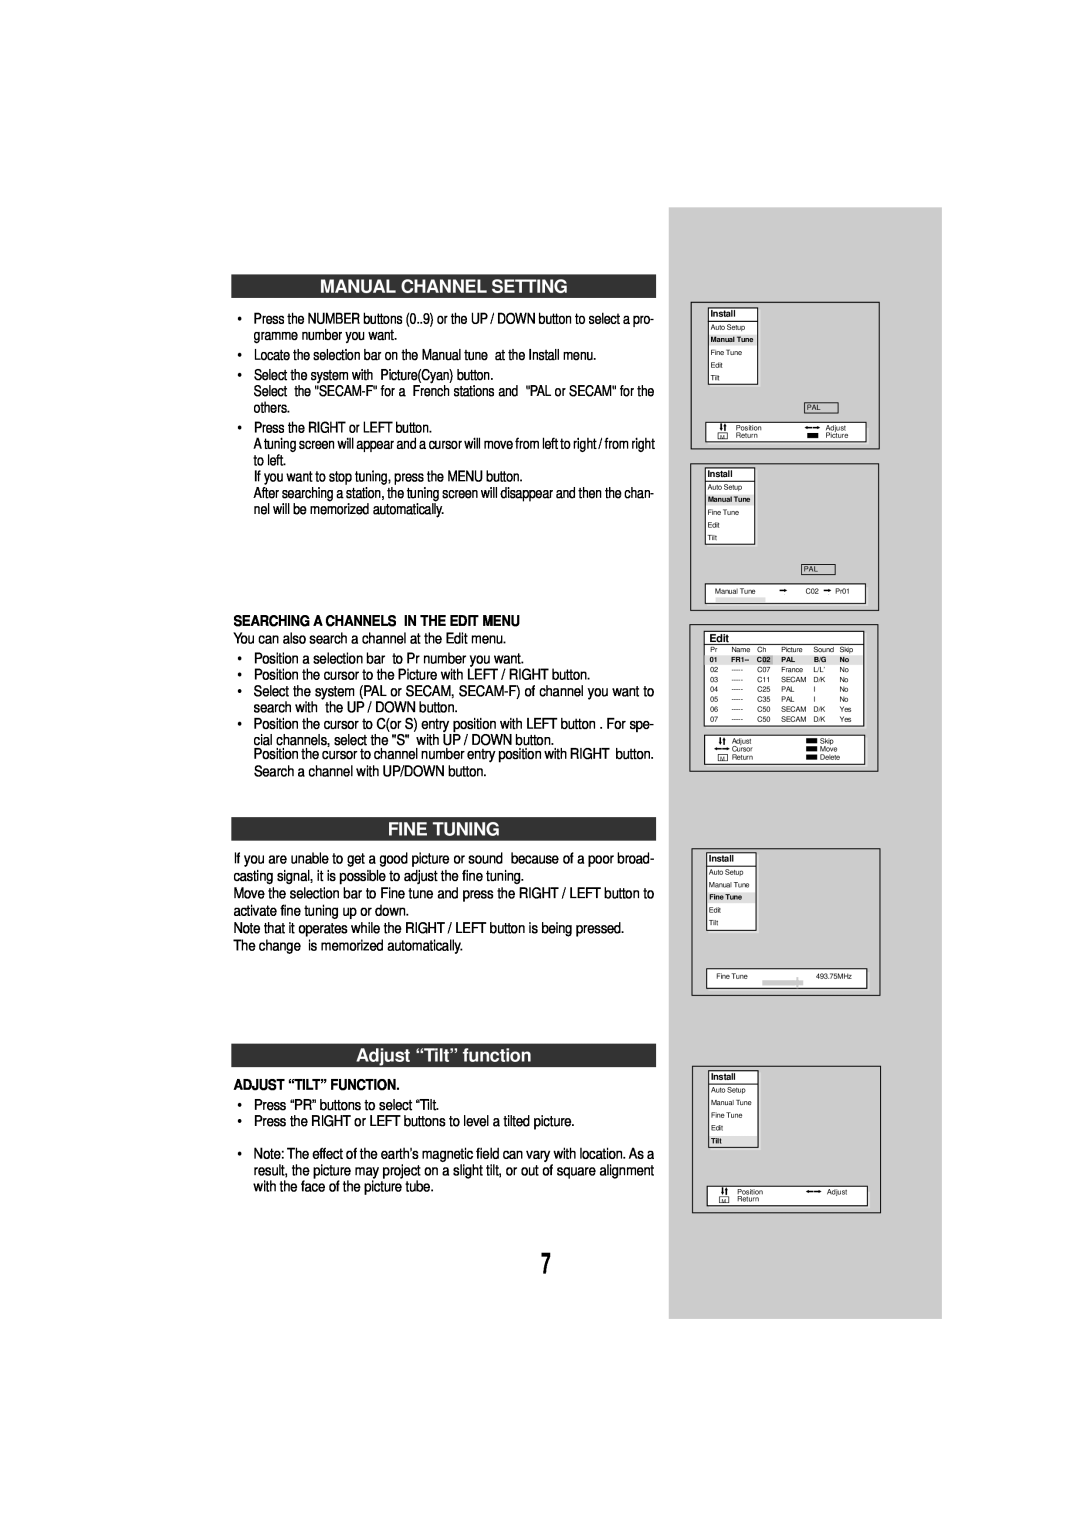 Daewoo DSC-3270E Manual Channel Setting, Fine Tuning, Adjust “Tilt” function, Searching A Channels In The Edit Menu 